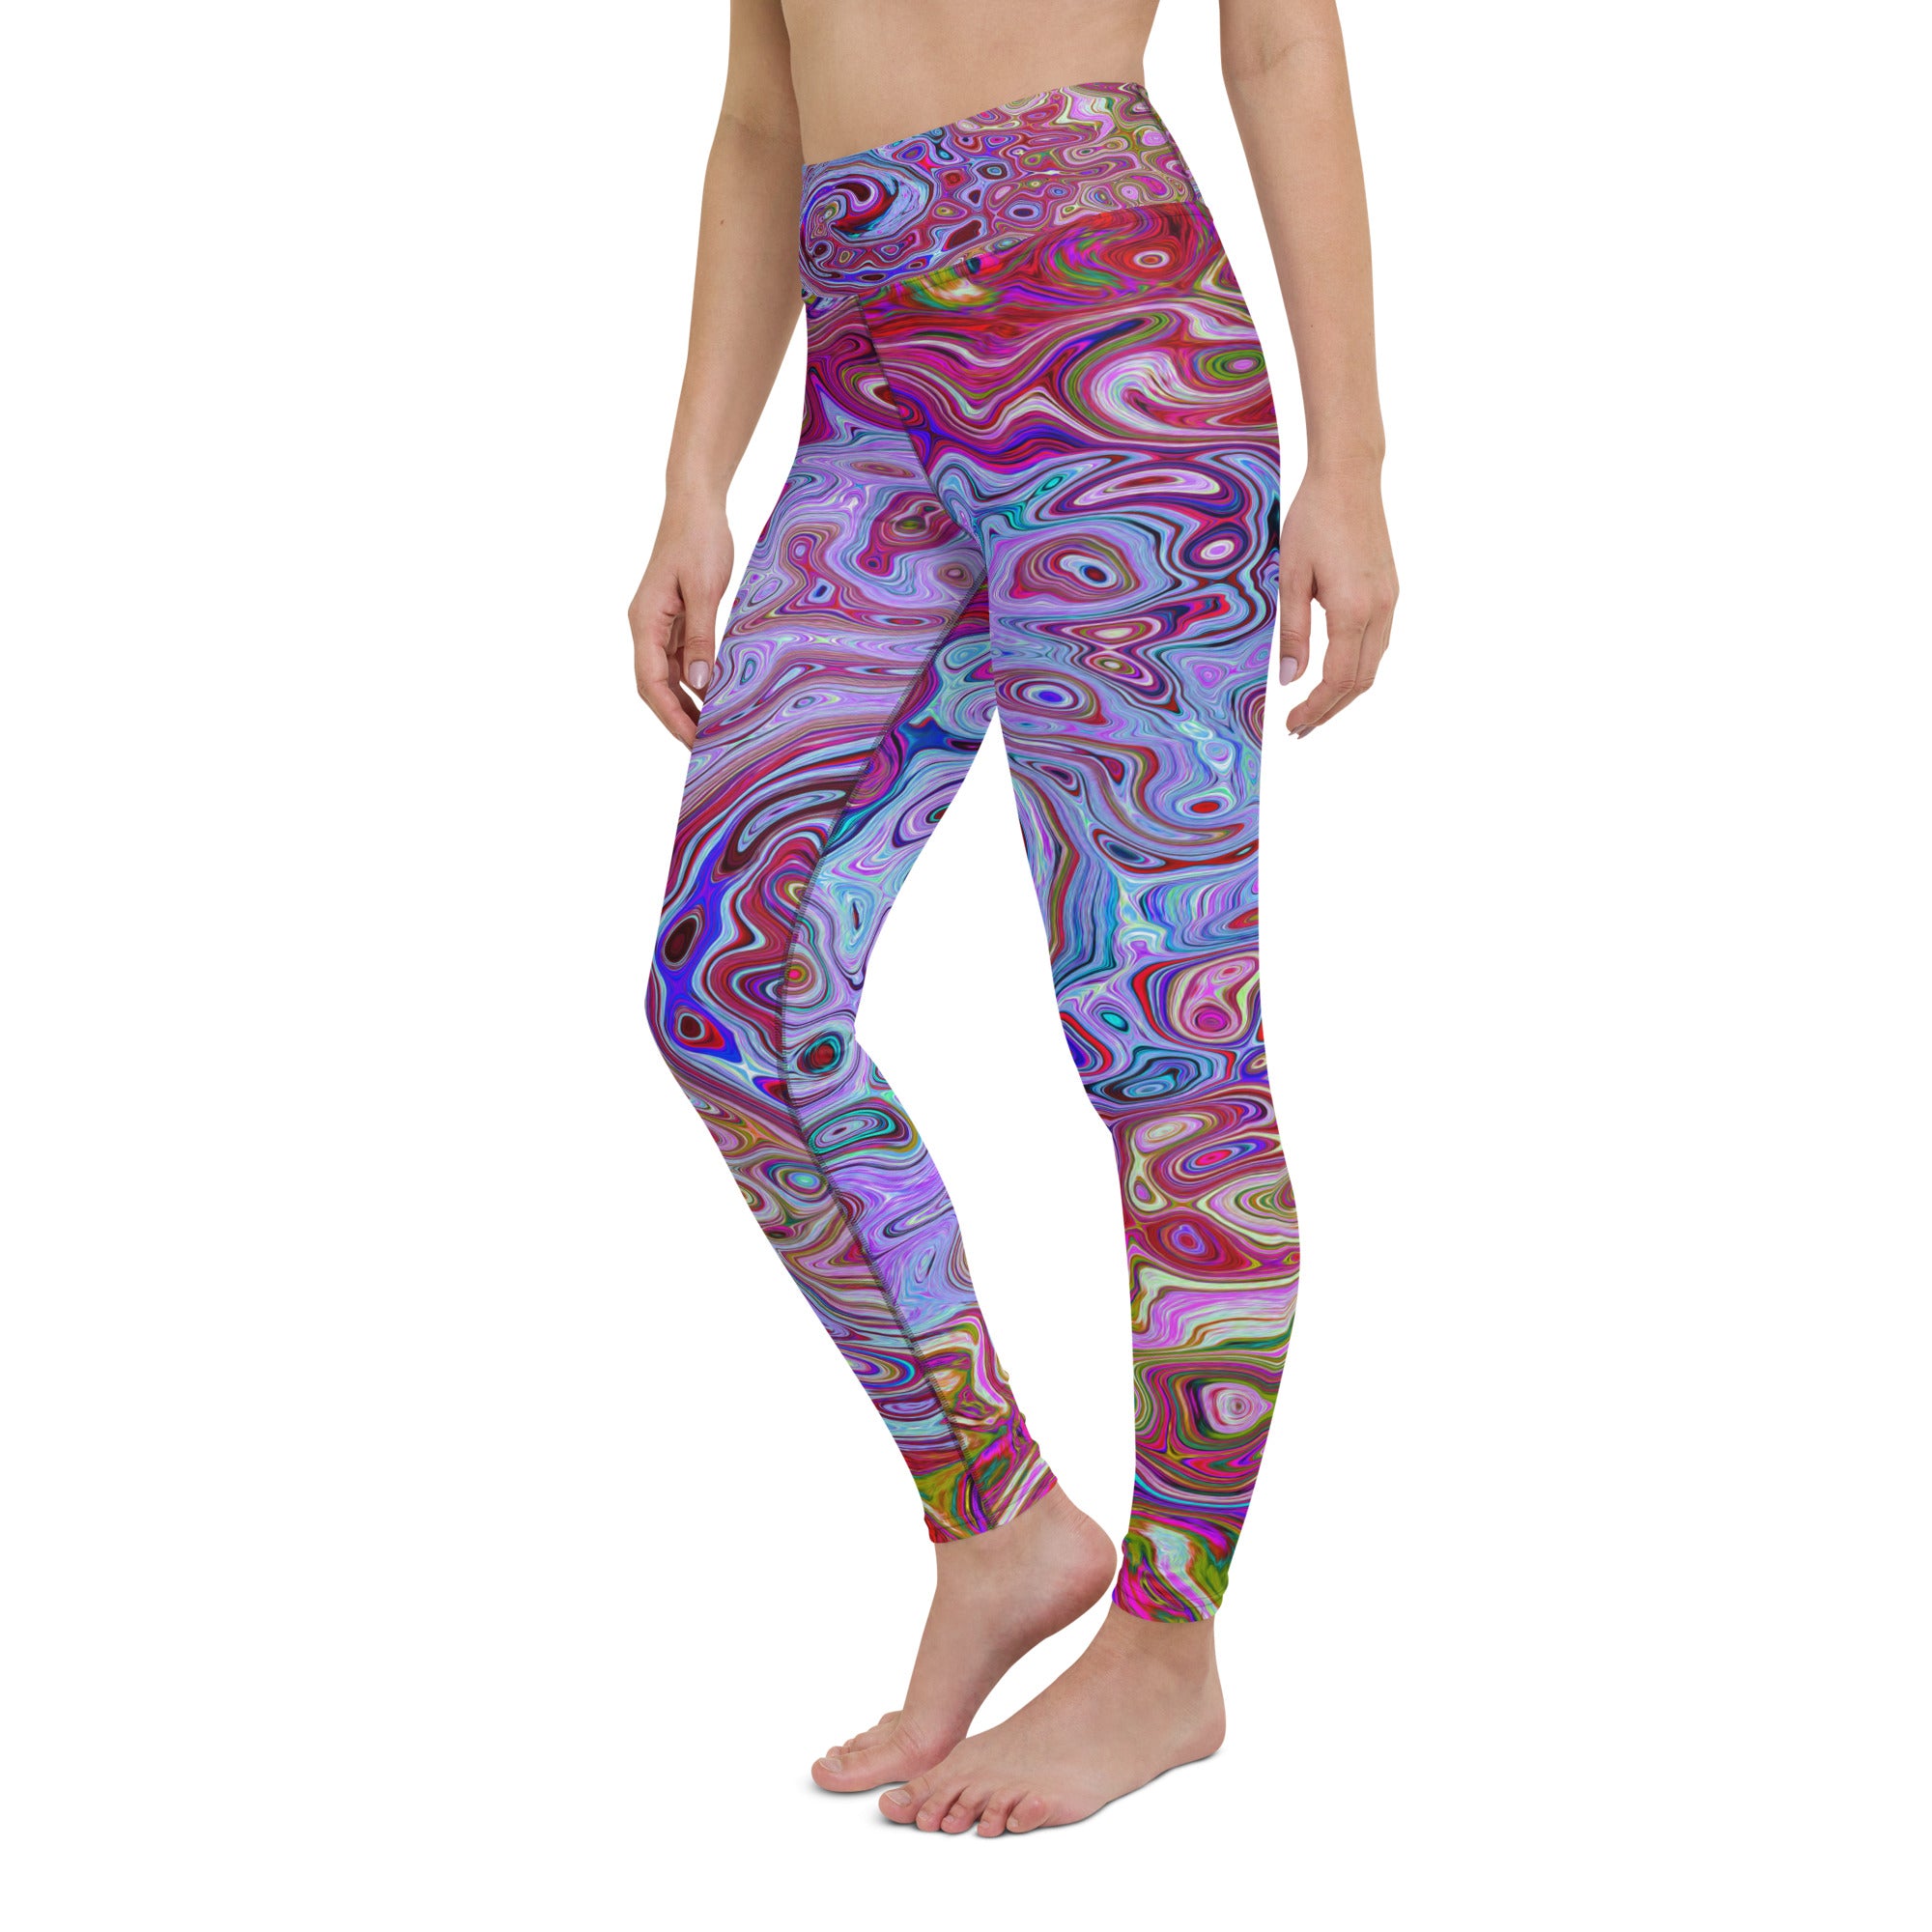 Yoga Leggings, Retro Groovy Abstract Lavender and Magenta Swirl